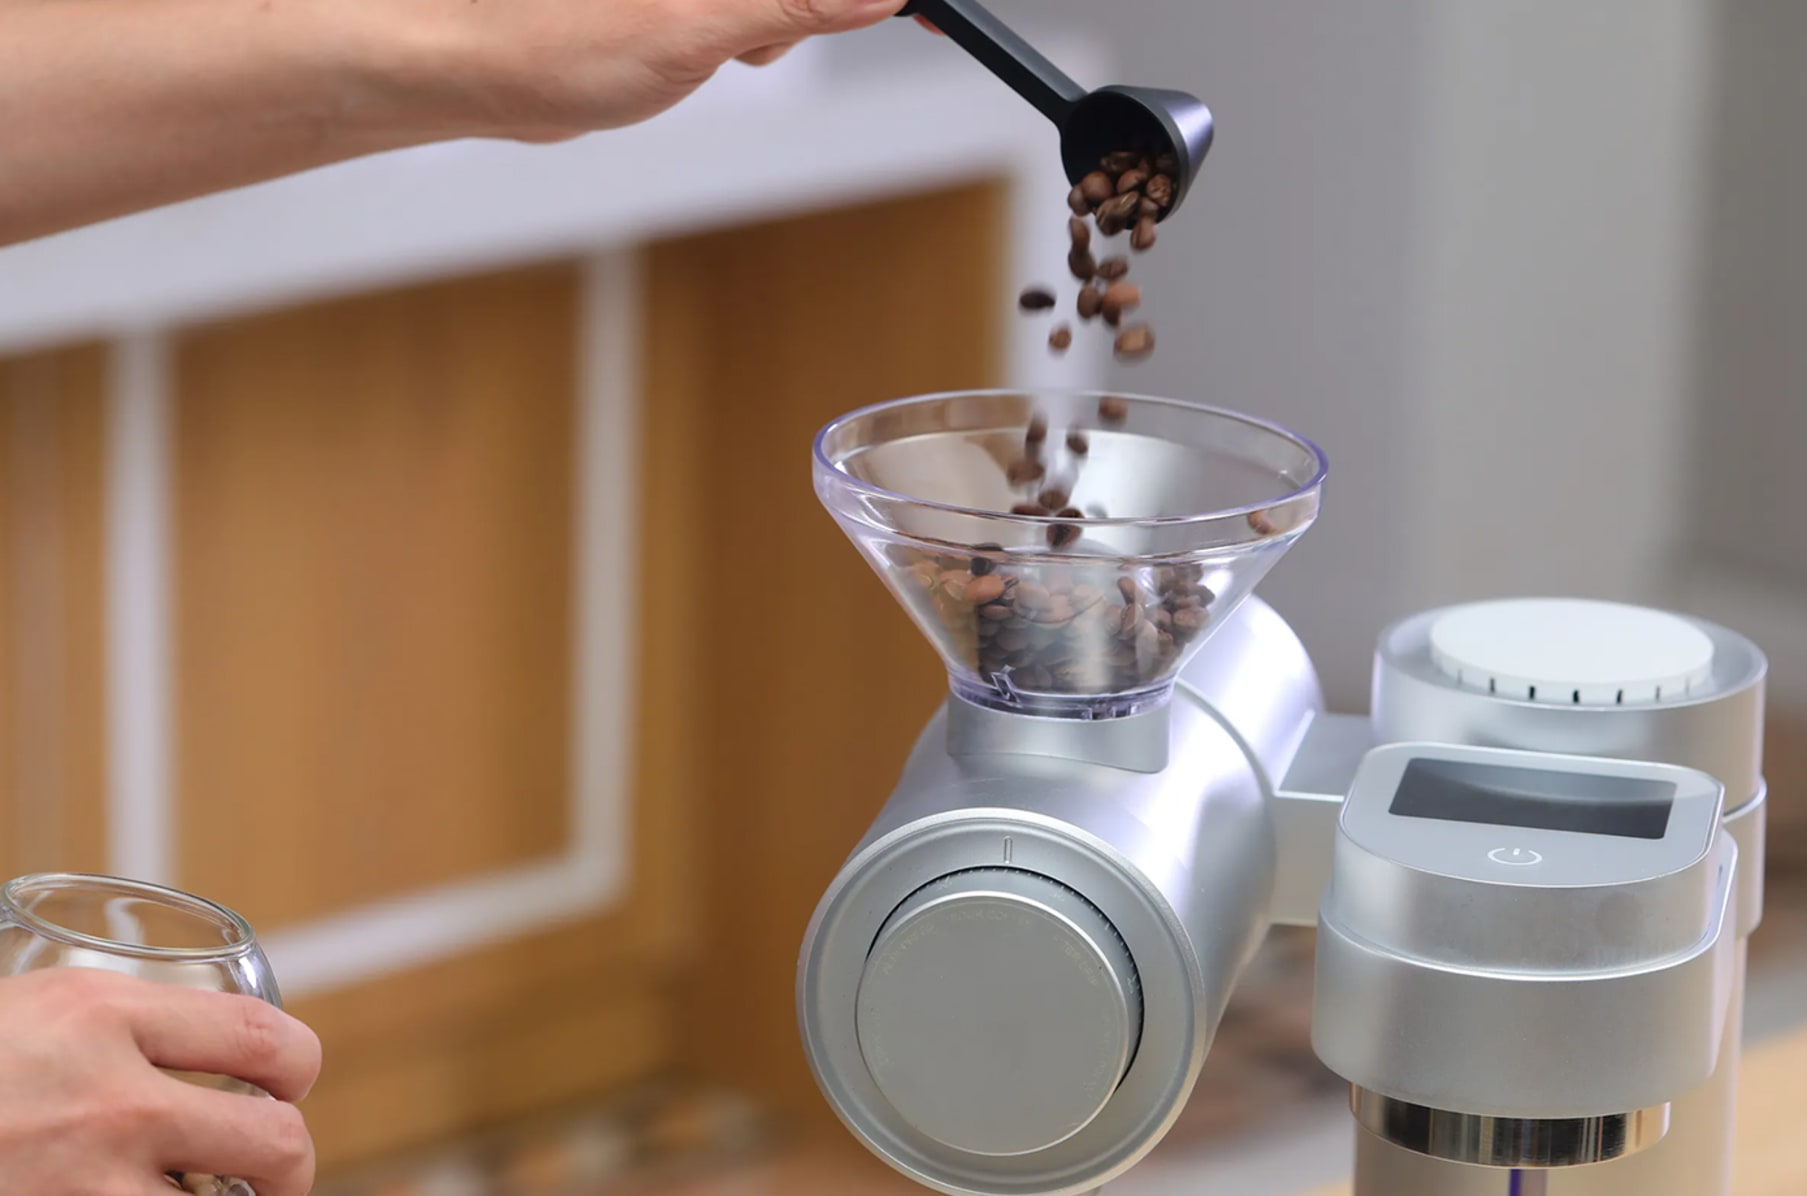 Gevi 4-in-1 Smart Pour-over Coffee Machine Silver